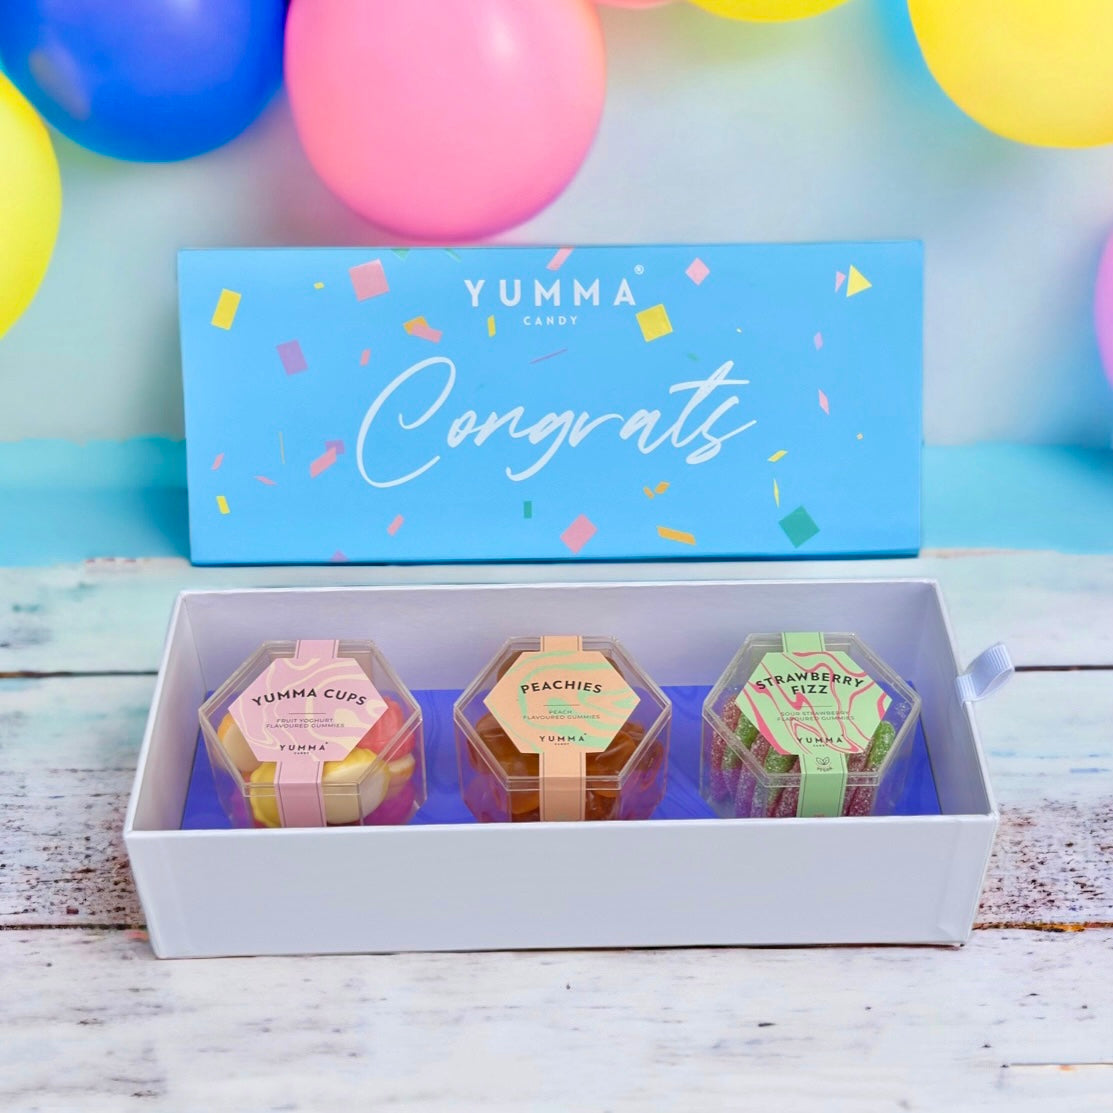 Yumma Candy Gift Set - Congrats